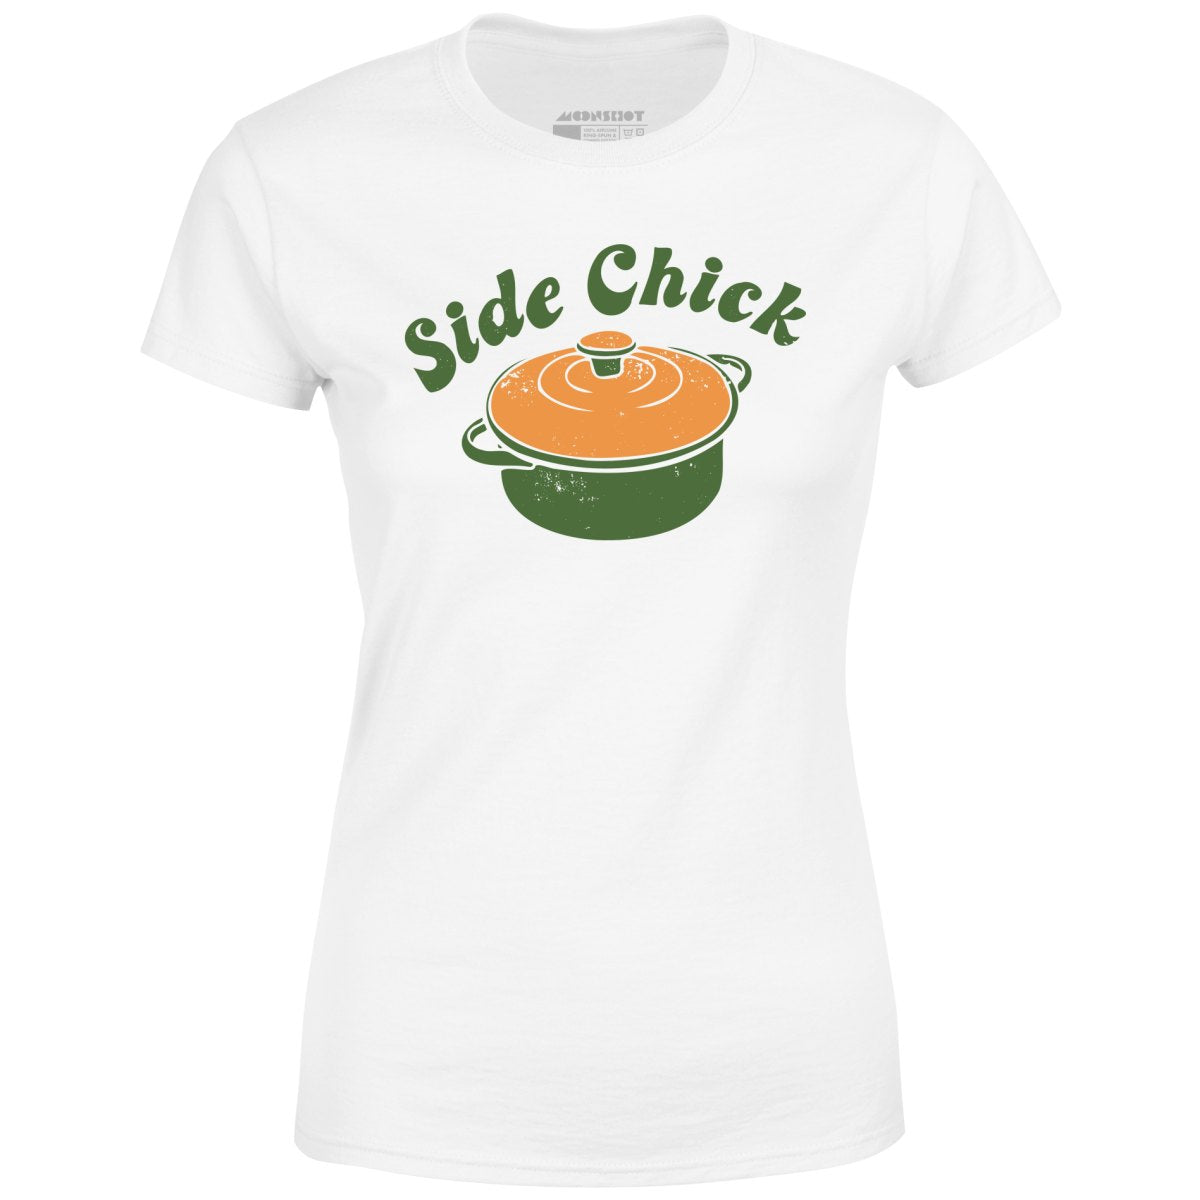 Side Chick - Women's T-Shirt